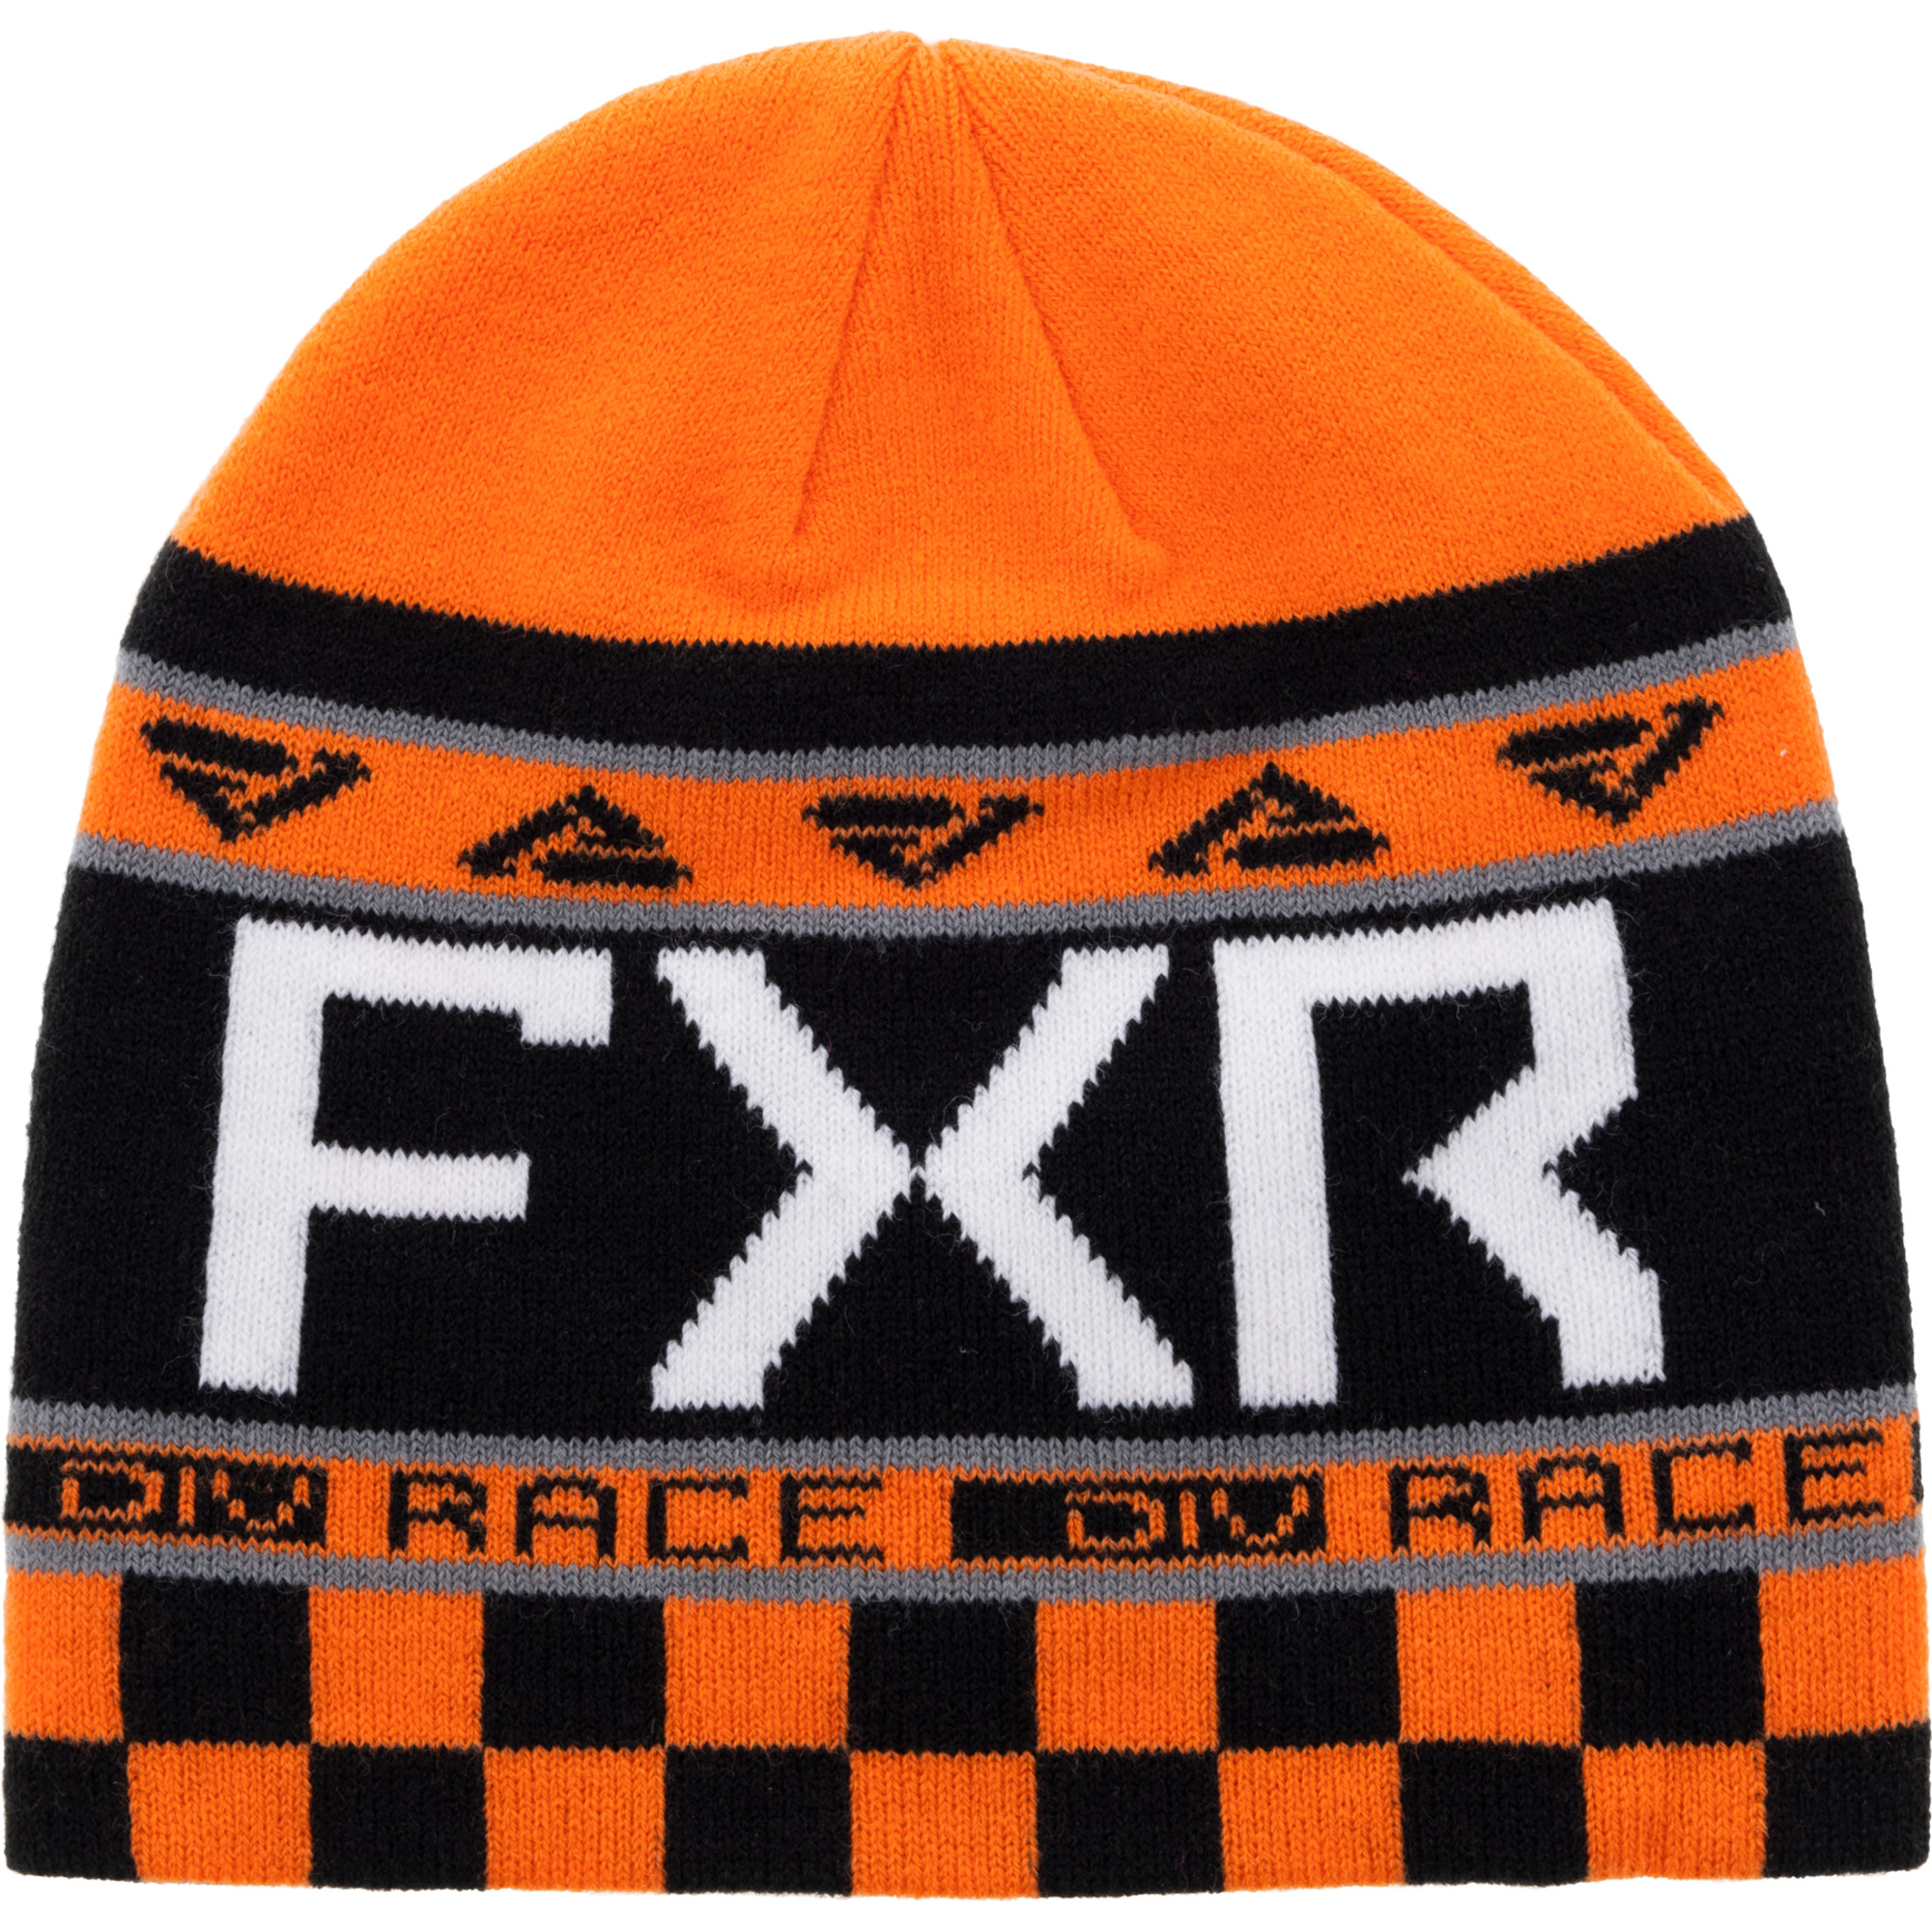 fxr racing beanie headwear for kids race division